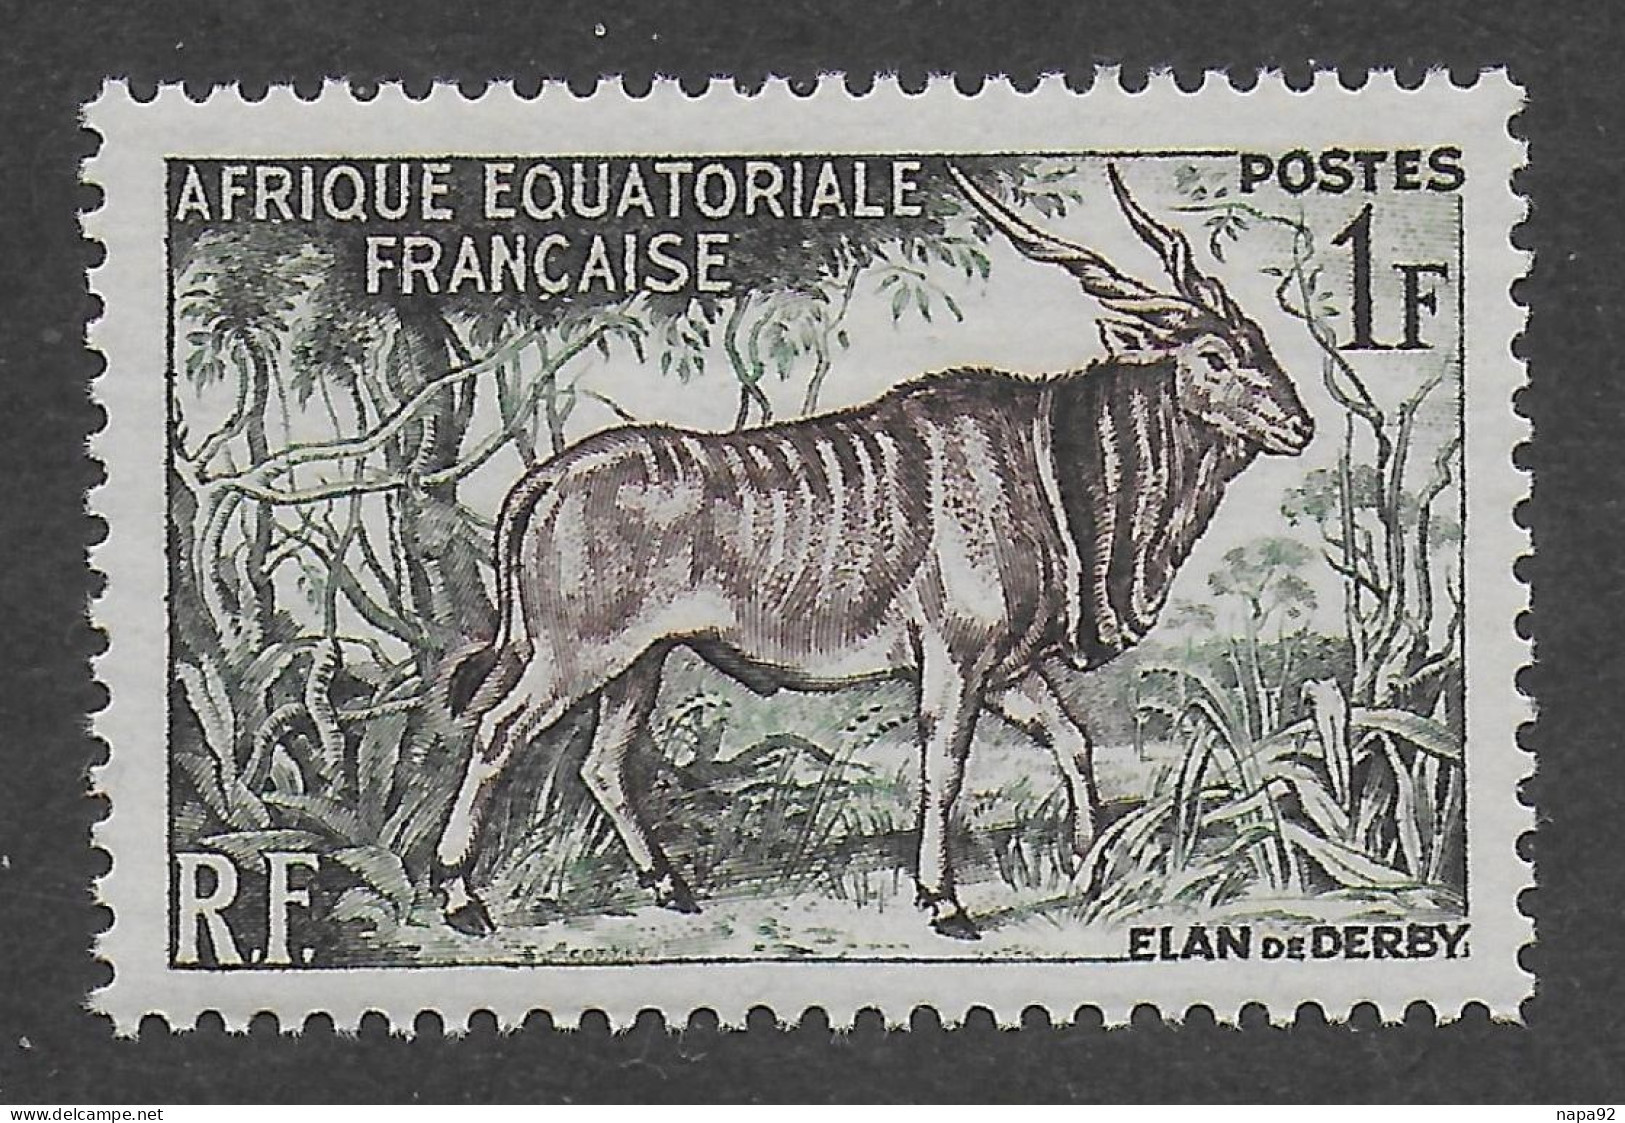 AFRIQUE EQUATORIALE FRANCAISE - AEF - A.E.F. - 1957 - YT 238** - MNH - Unused Stamps